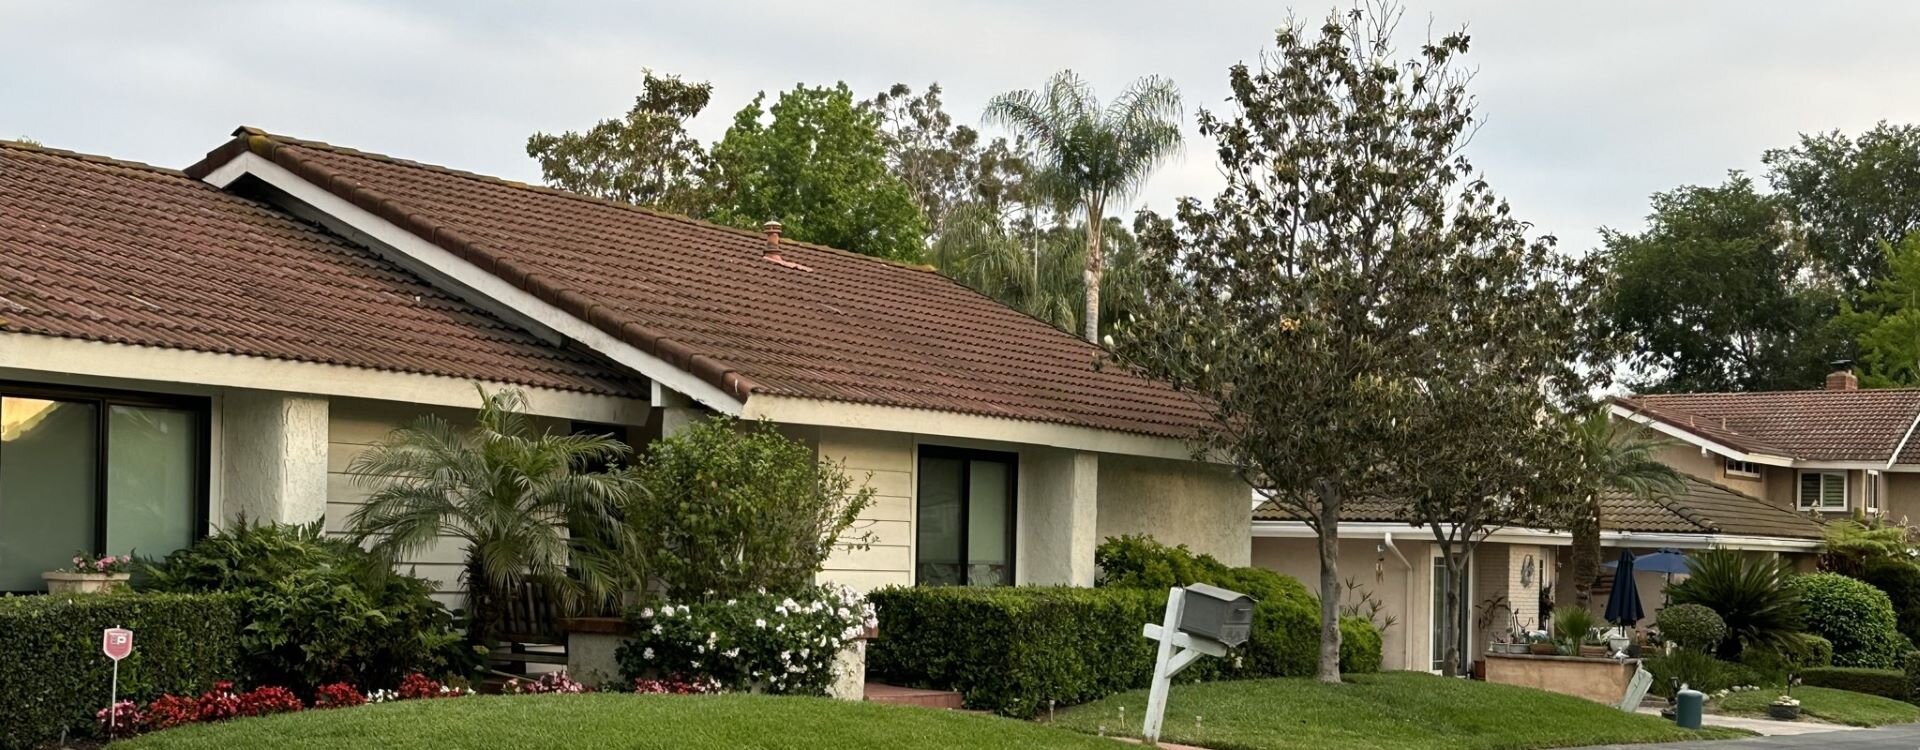 Houses in Orange County, California